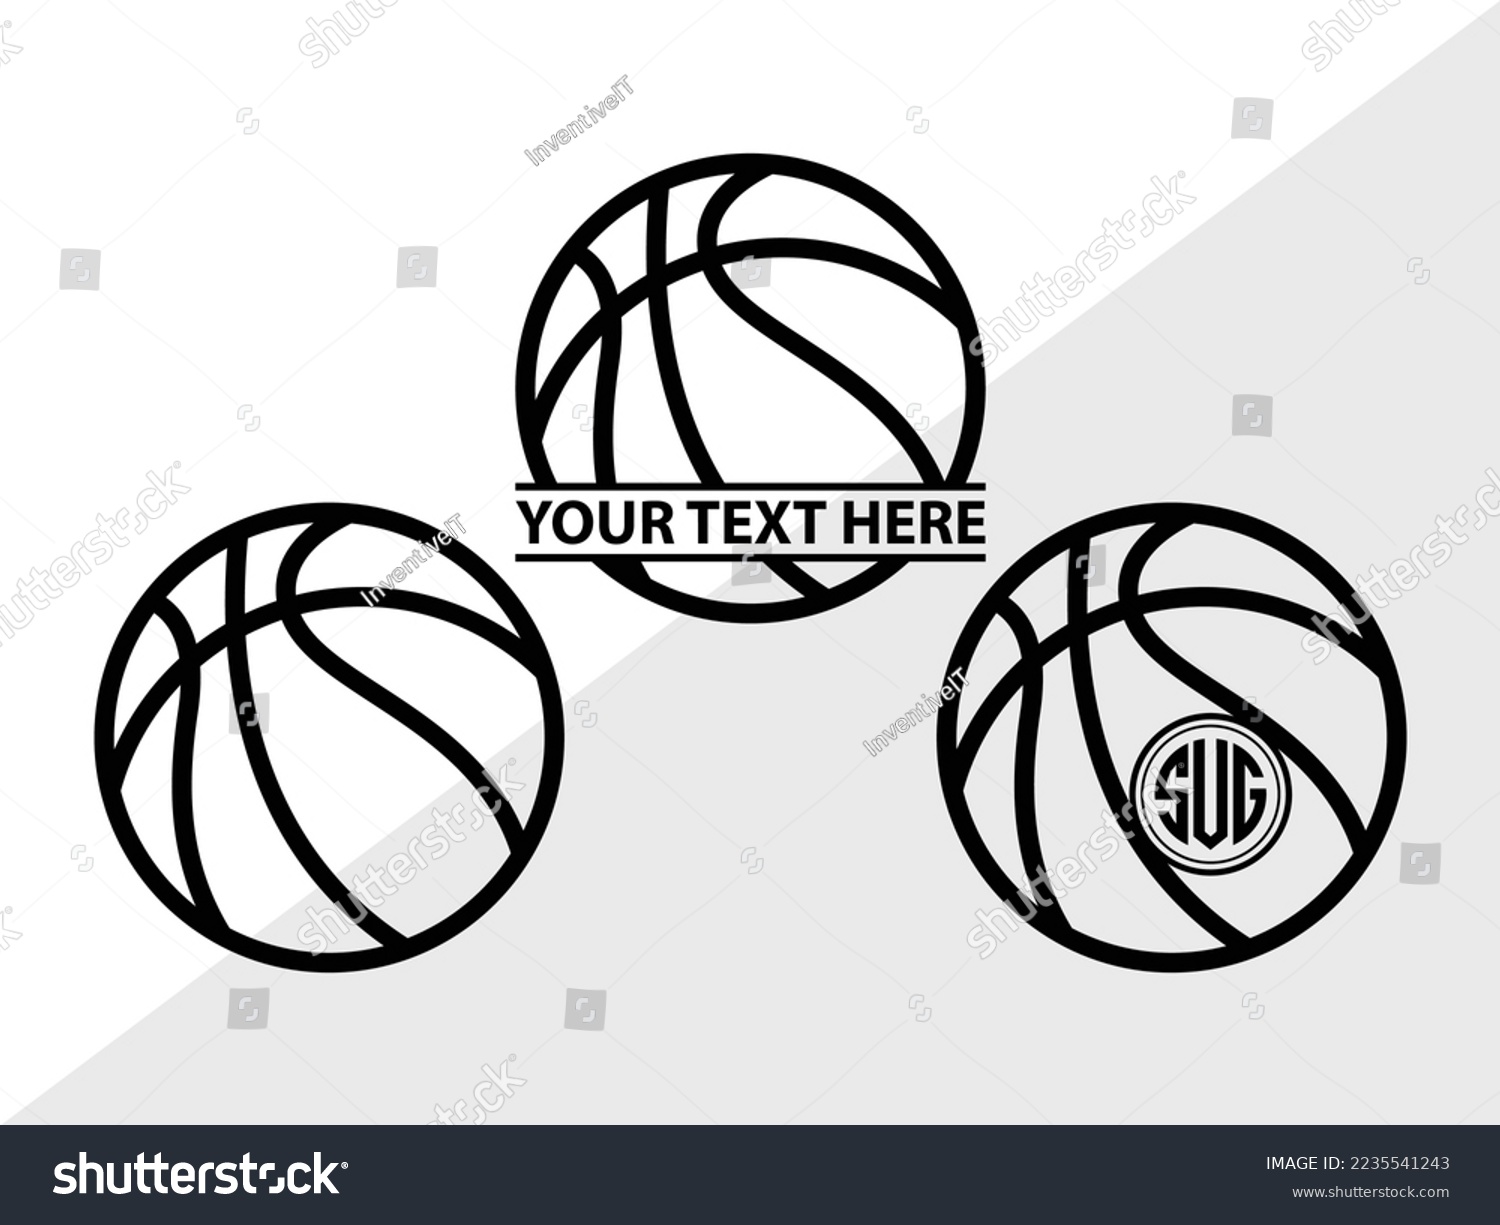 SVG of Basketball Monogram Vector Illustration Silhouette svg